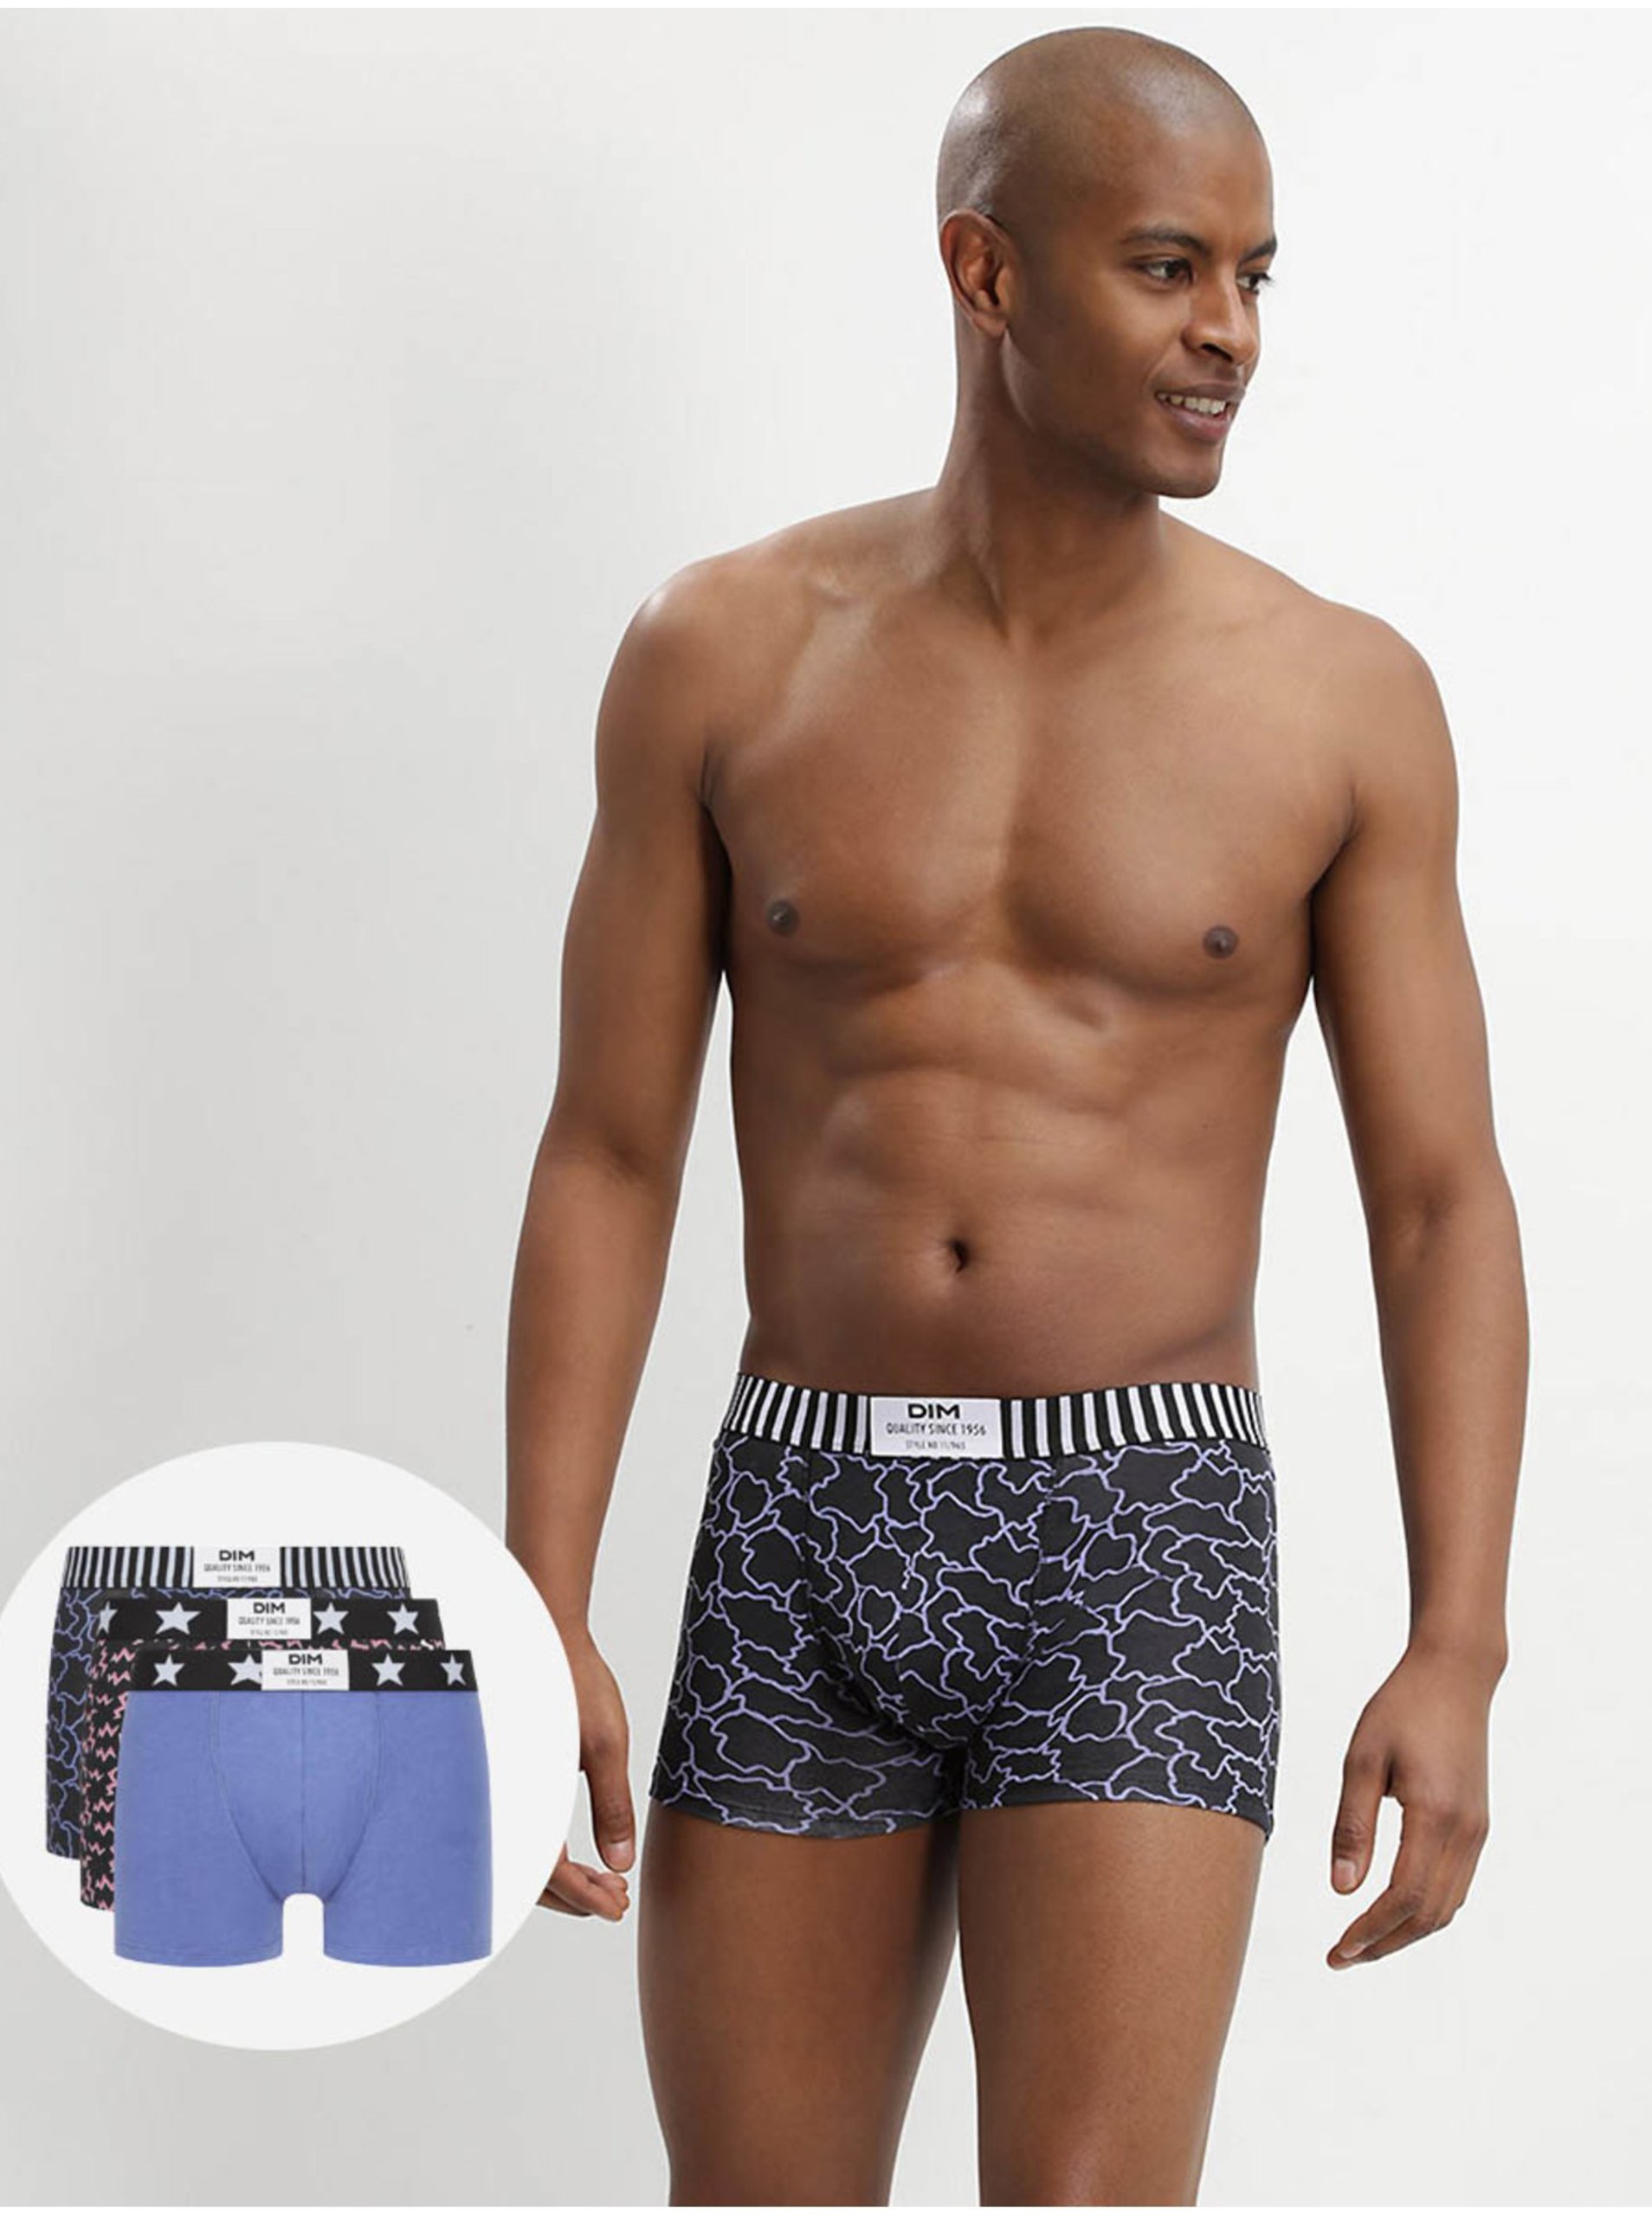 E-shop Sada tří pánských vzorovaných boxerek v černé a modré barvě Dim VIBES BOXER 3x